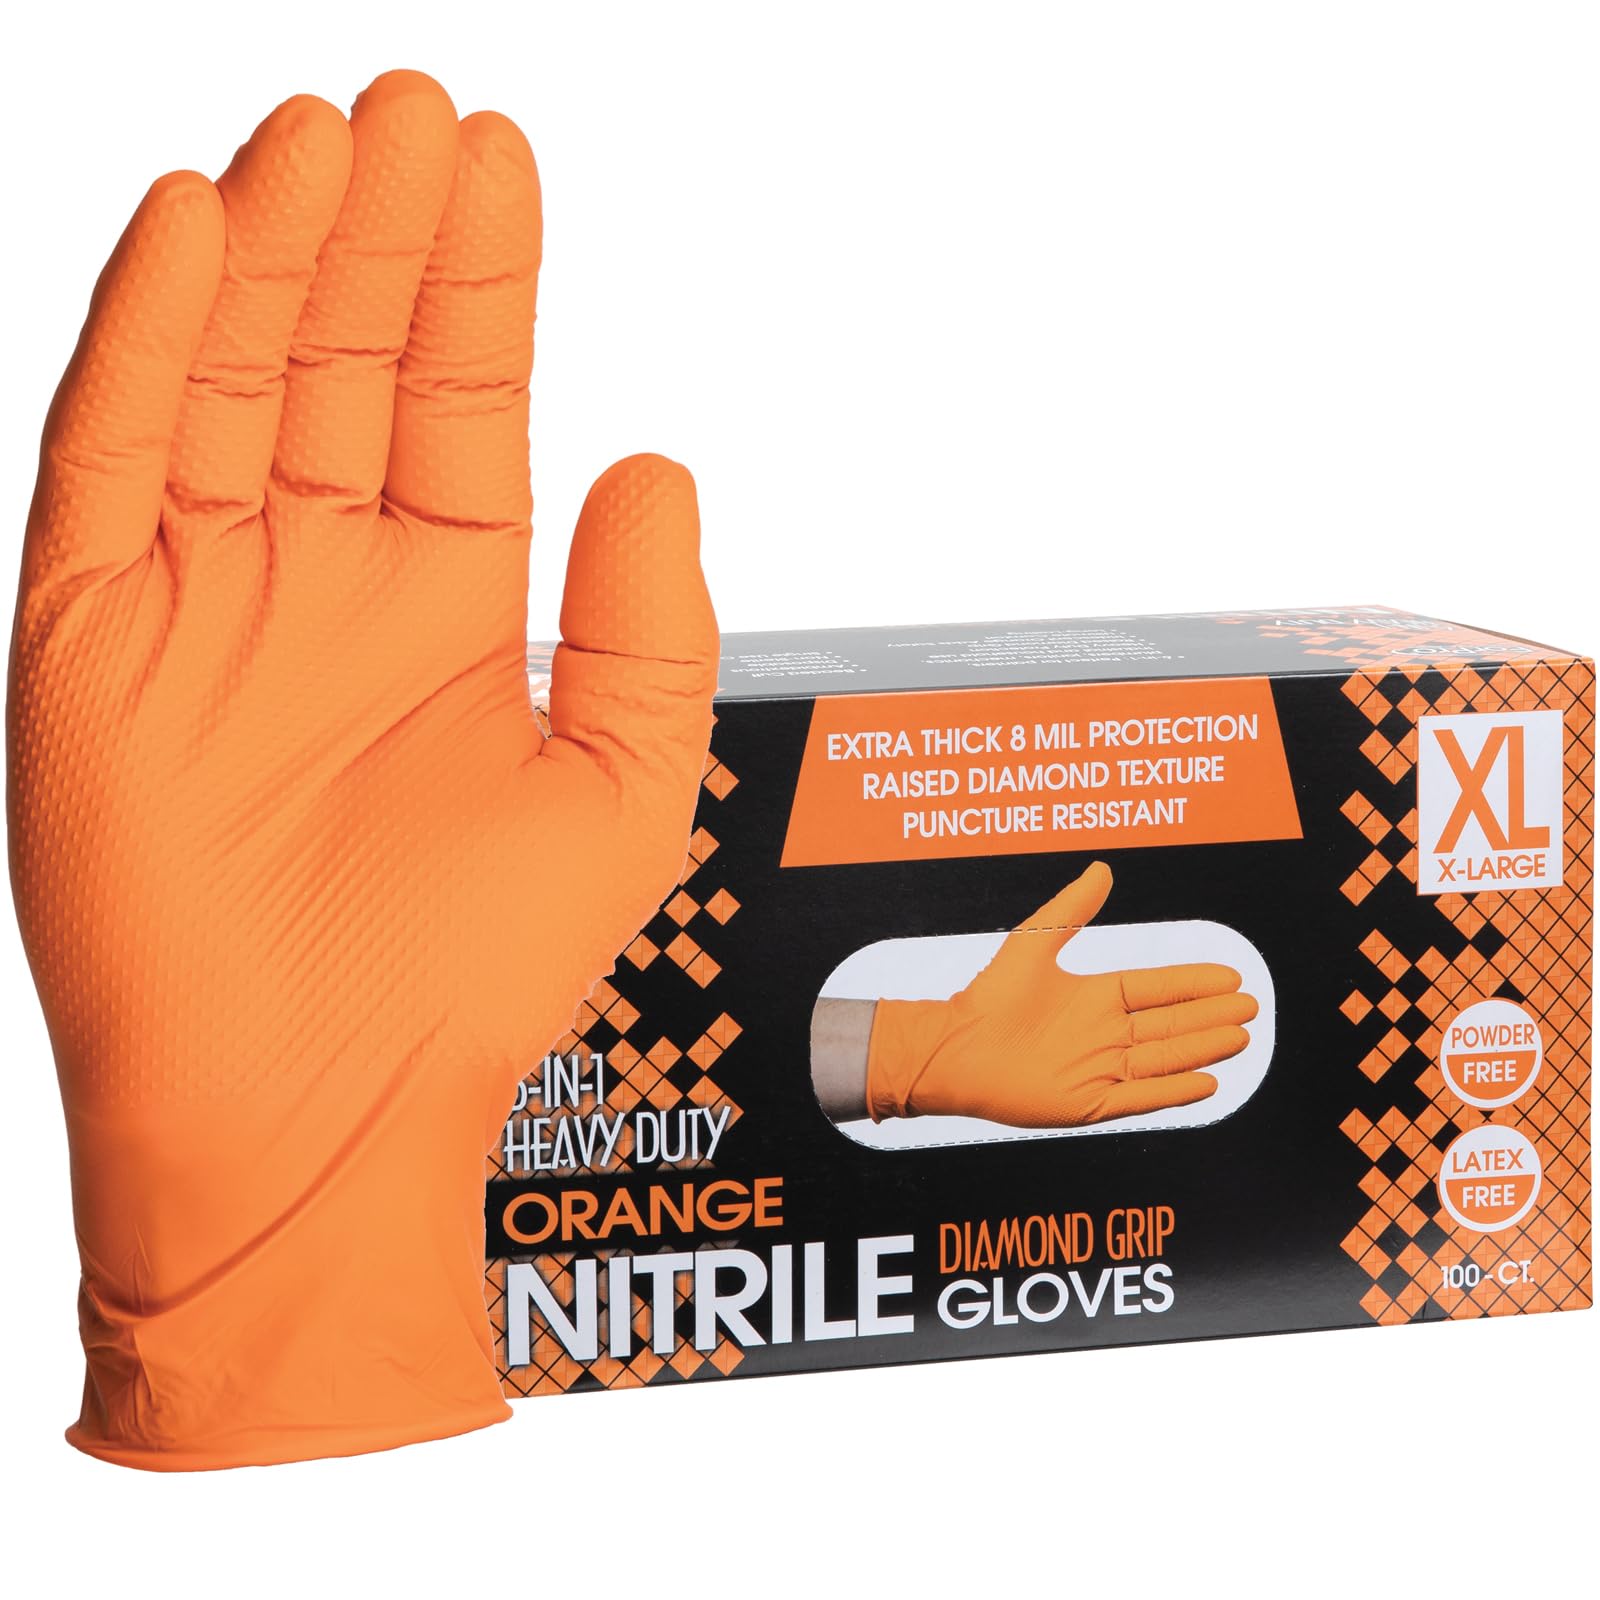 ForPro Heavy Duty Disposable Nitrile Gloves, Orange, 8 Mil, Industrial Grade, Raised Diamond Grip, Latex-Free, 100-Count